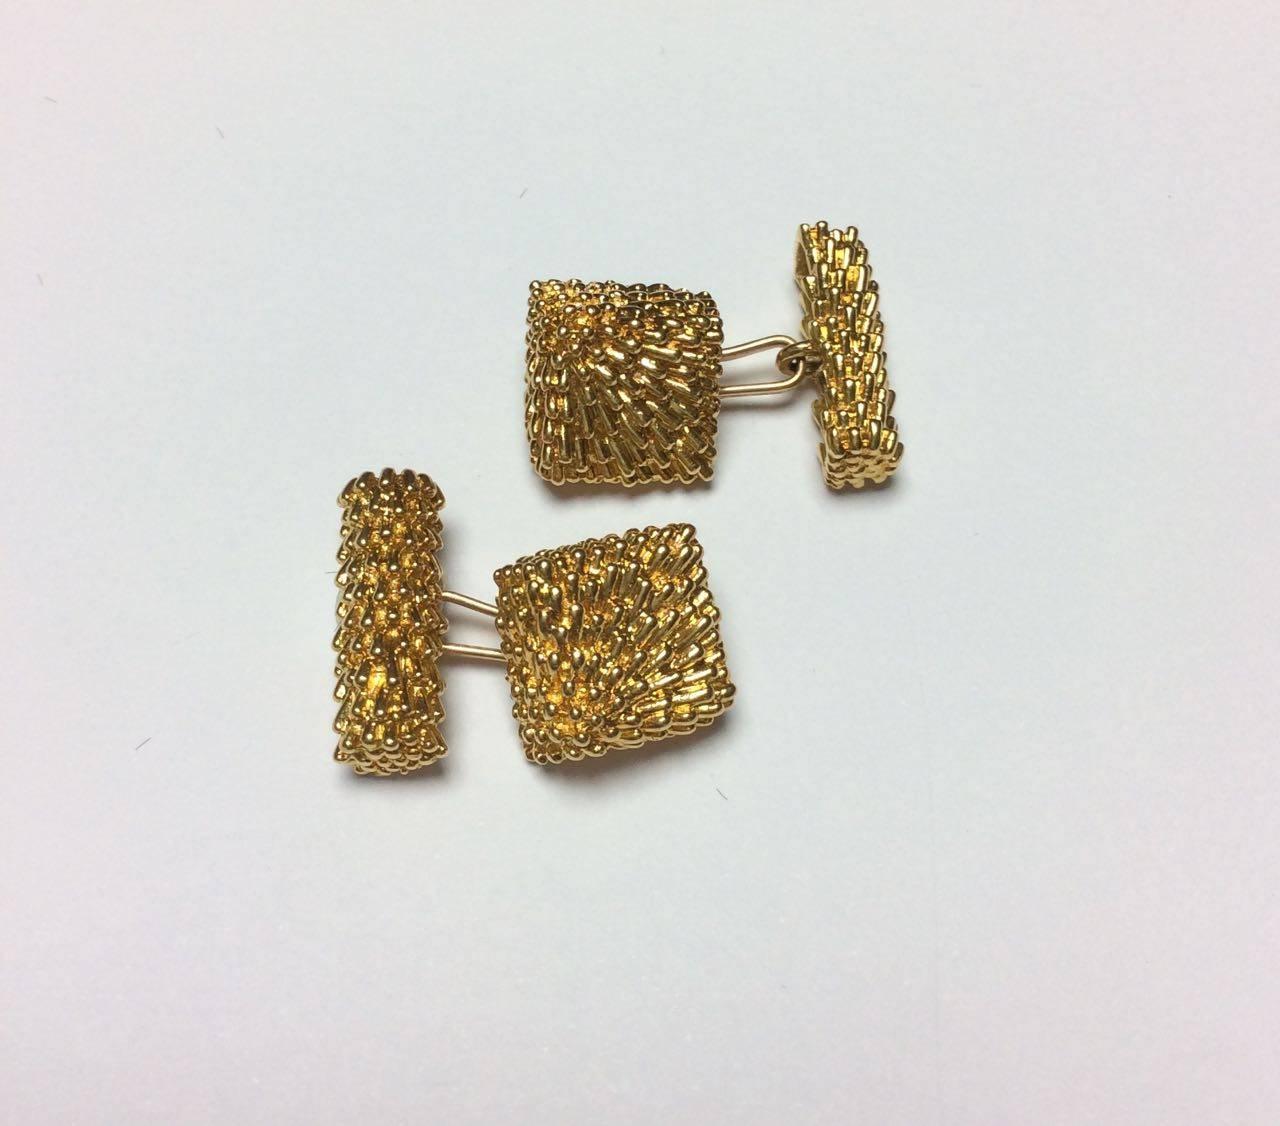 1960s Van Cleef & Arpels cufflinks in 18k gold.